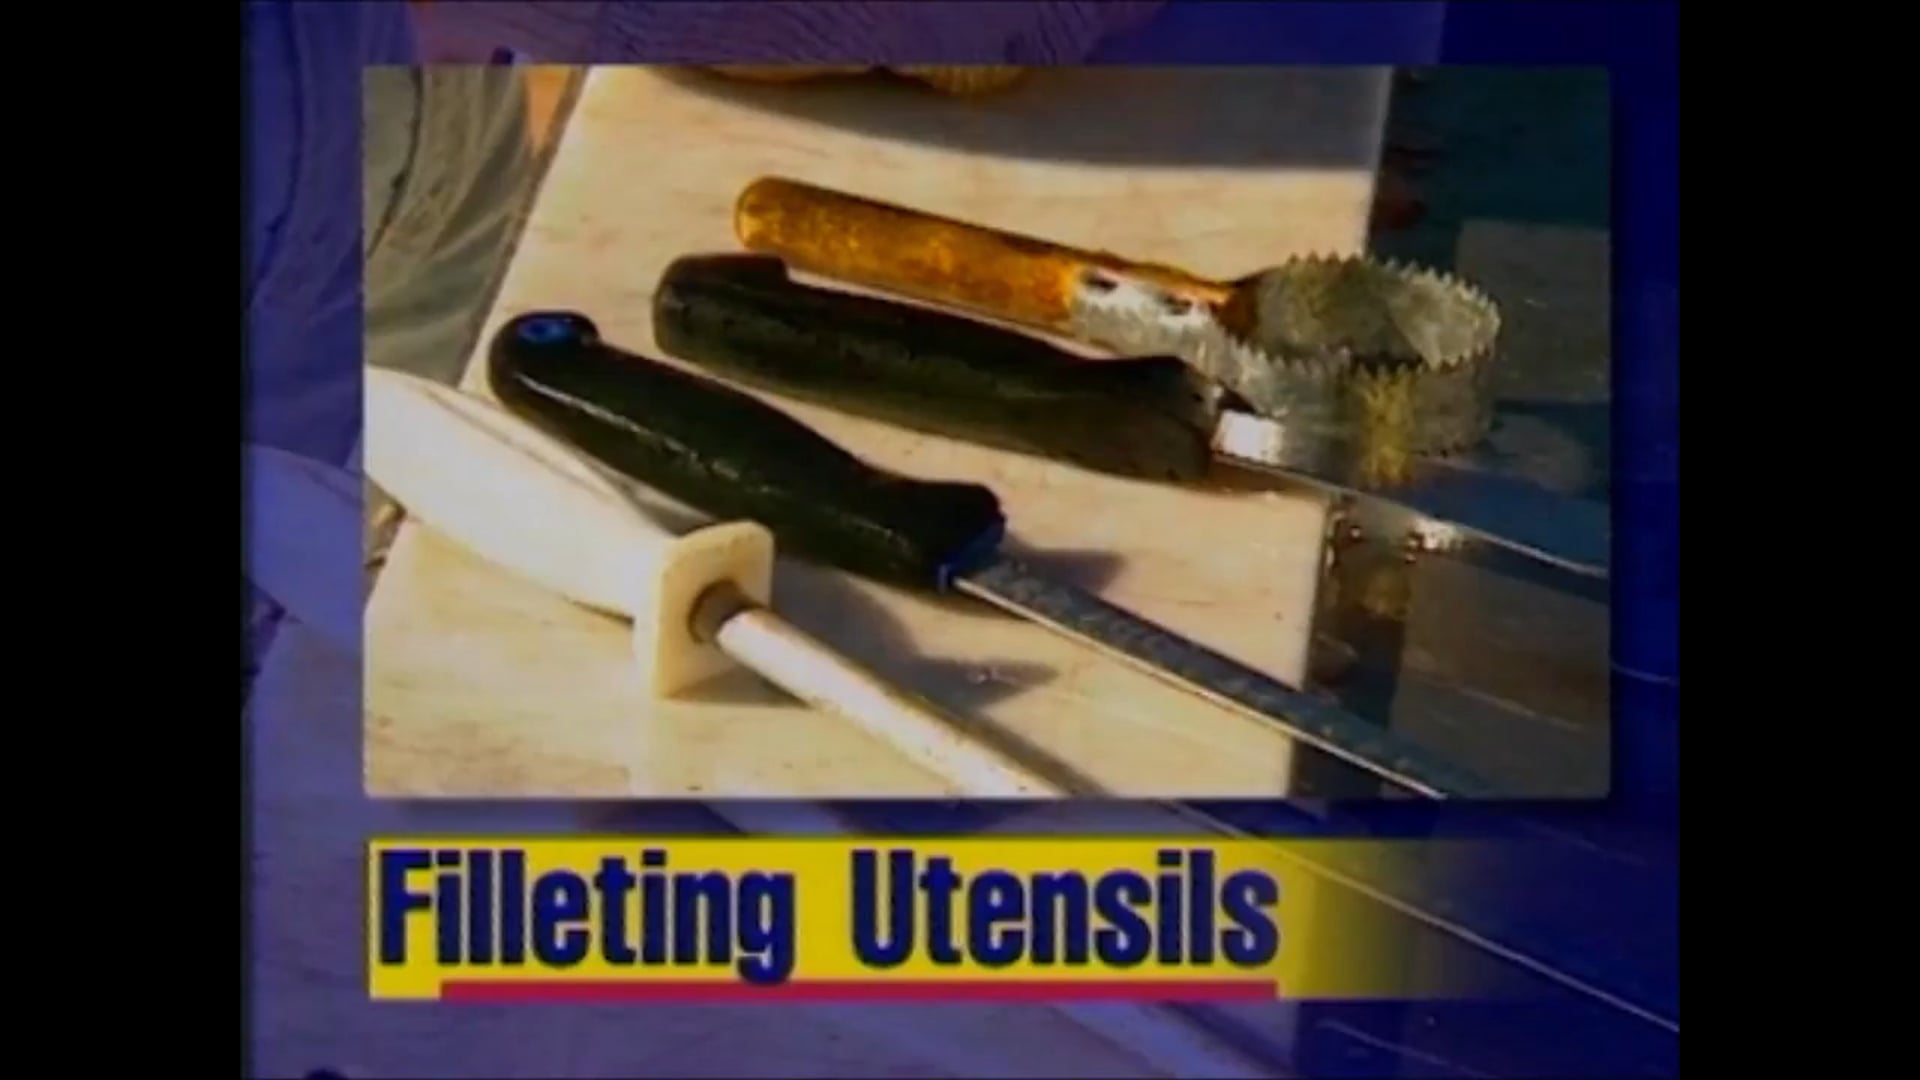 Filleting Utensils – Steve Jamieson